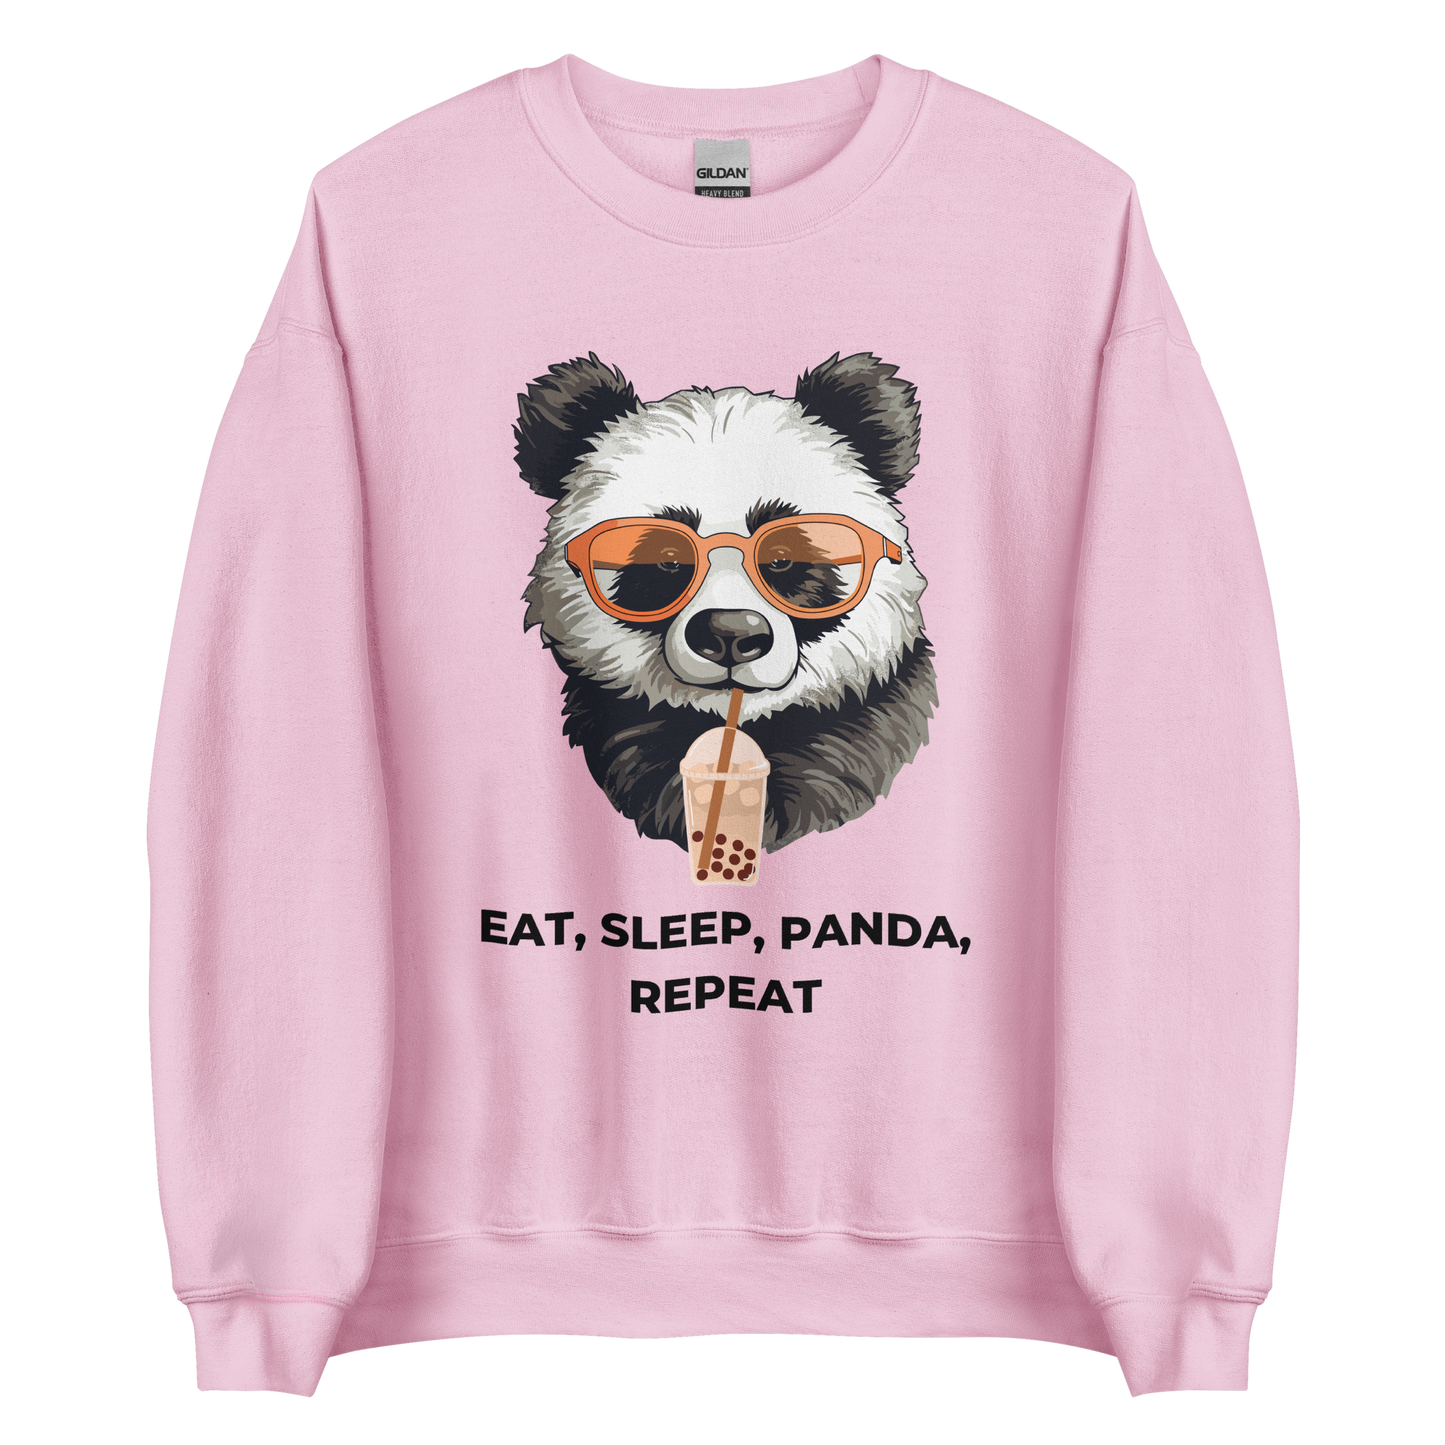 Light Pink Panda Sweatshirt featuring an adorable Eat, Sleep, Panda, Repeat graphic on the chest - Funny Graphic Panda Sweatshirts - Boozy Fox